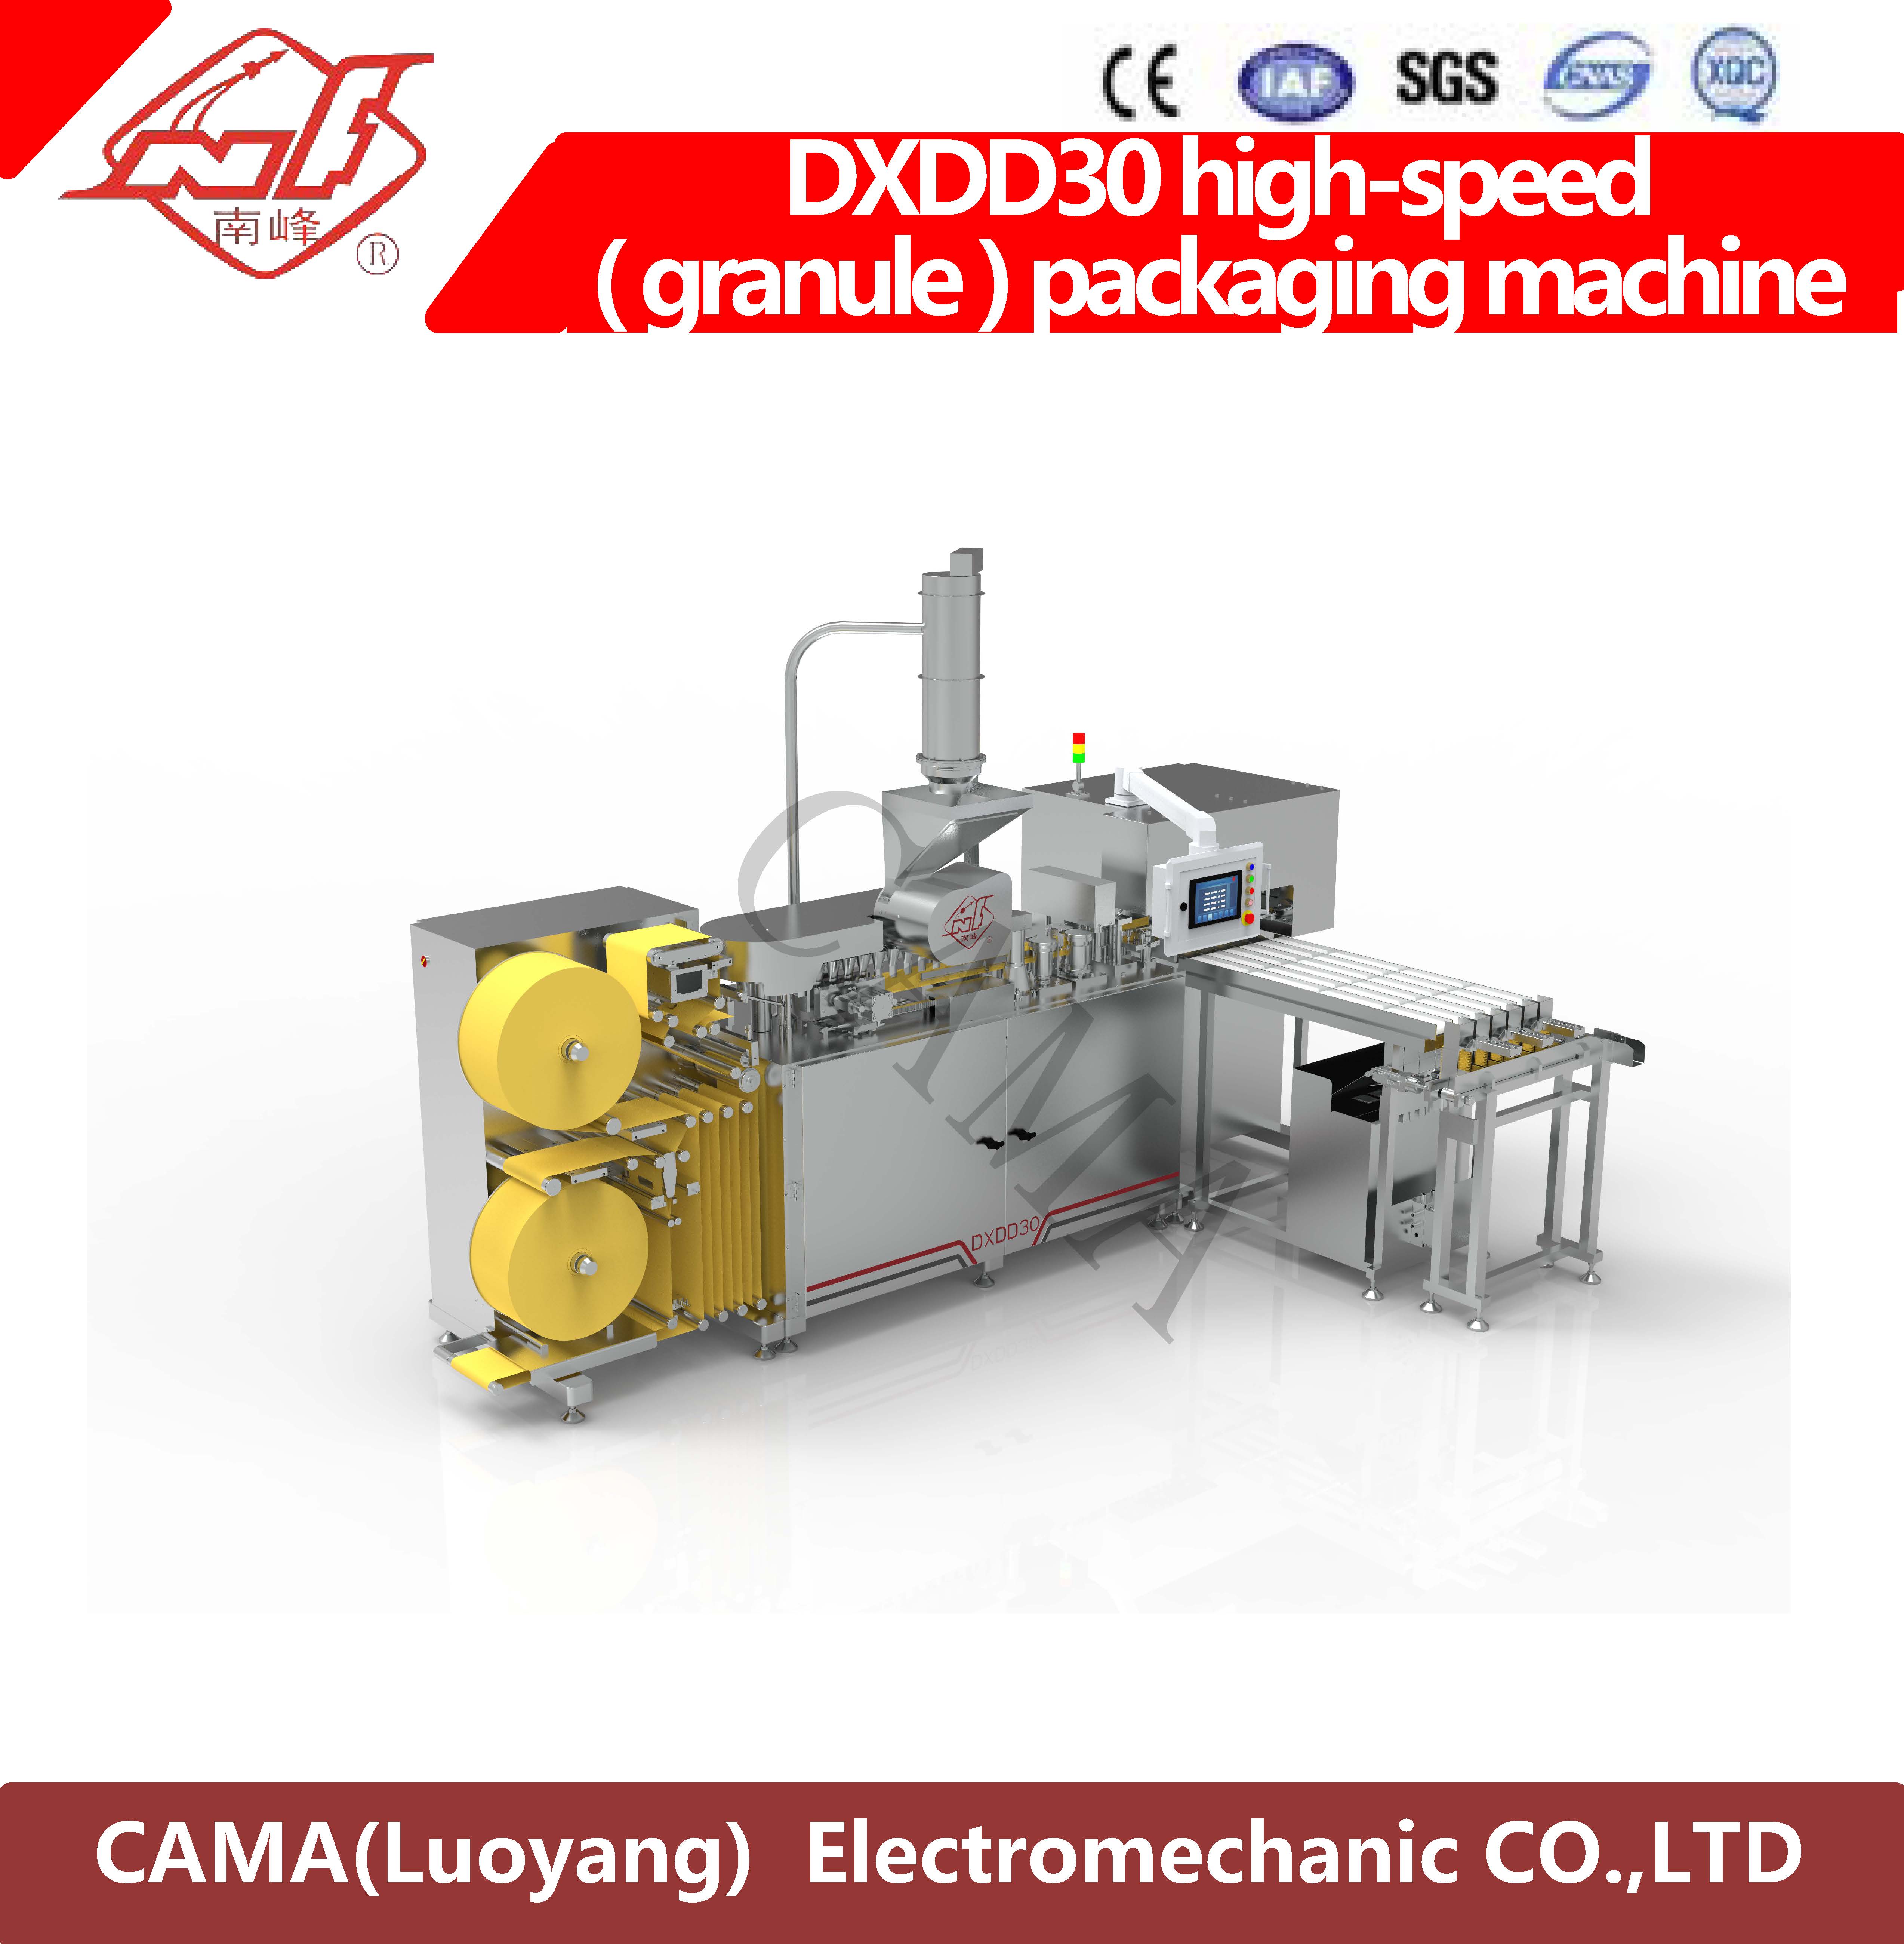 DXDD30 high-speed ( granule ) packaging machine